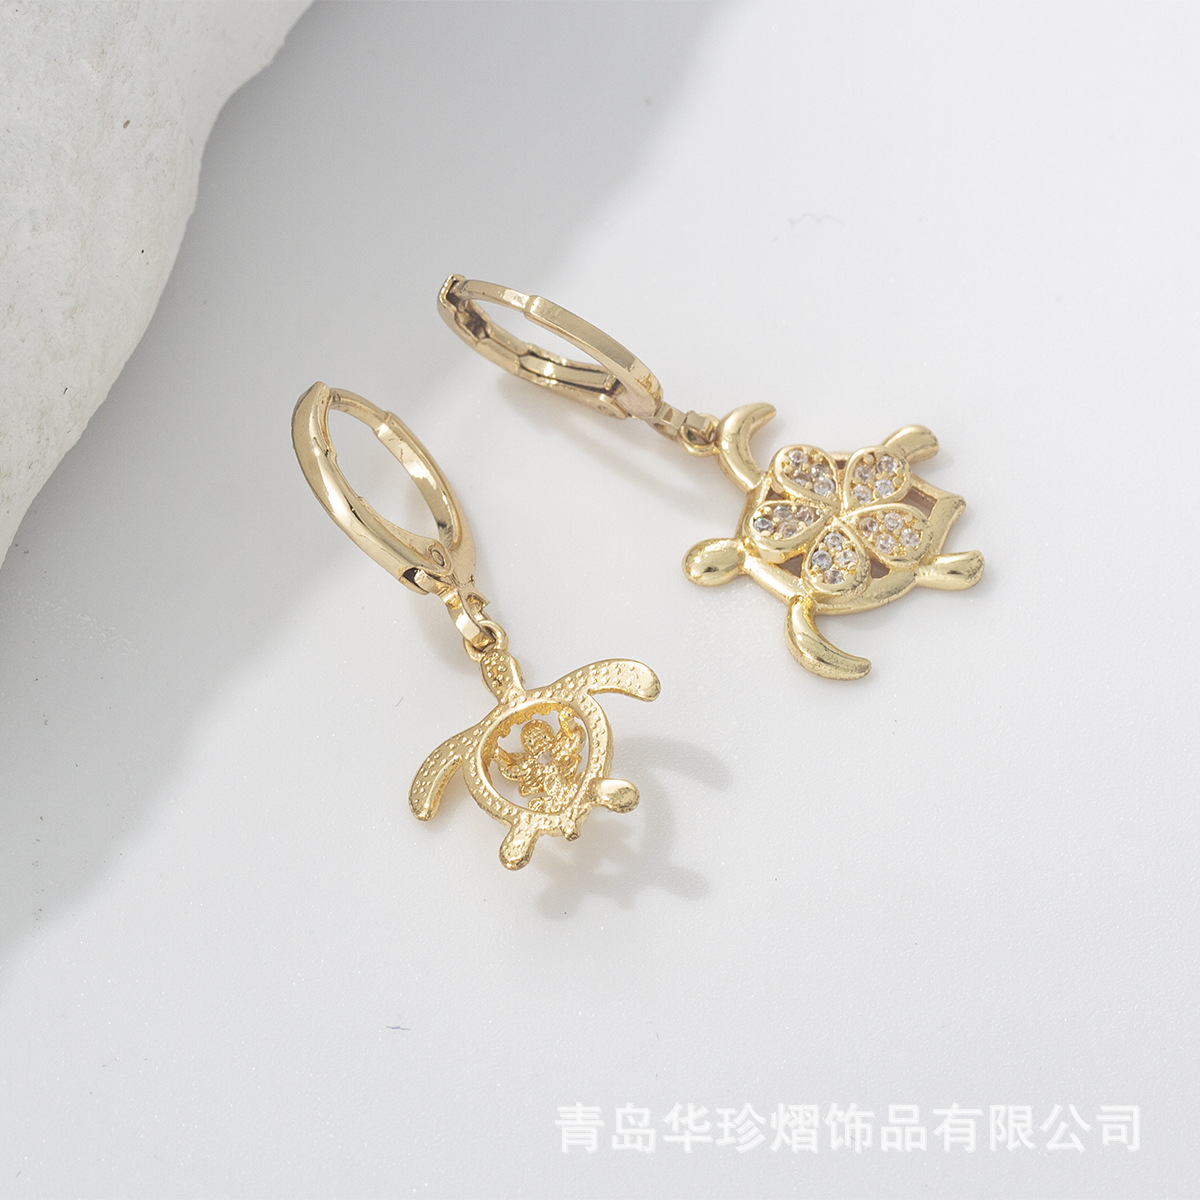 Qingdao jewelry Factory earrings fashion exquisite asymmetrical zircon sea turtle earrings personality light luxury electroplated earrings female